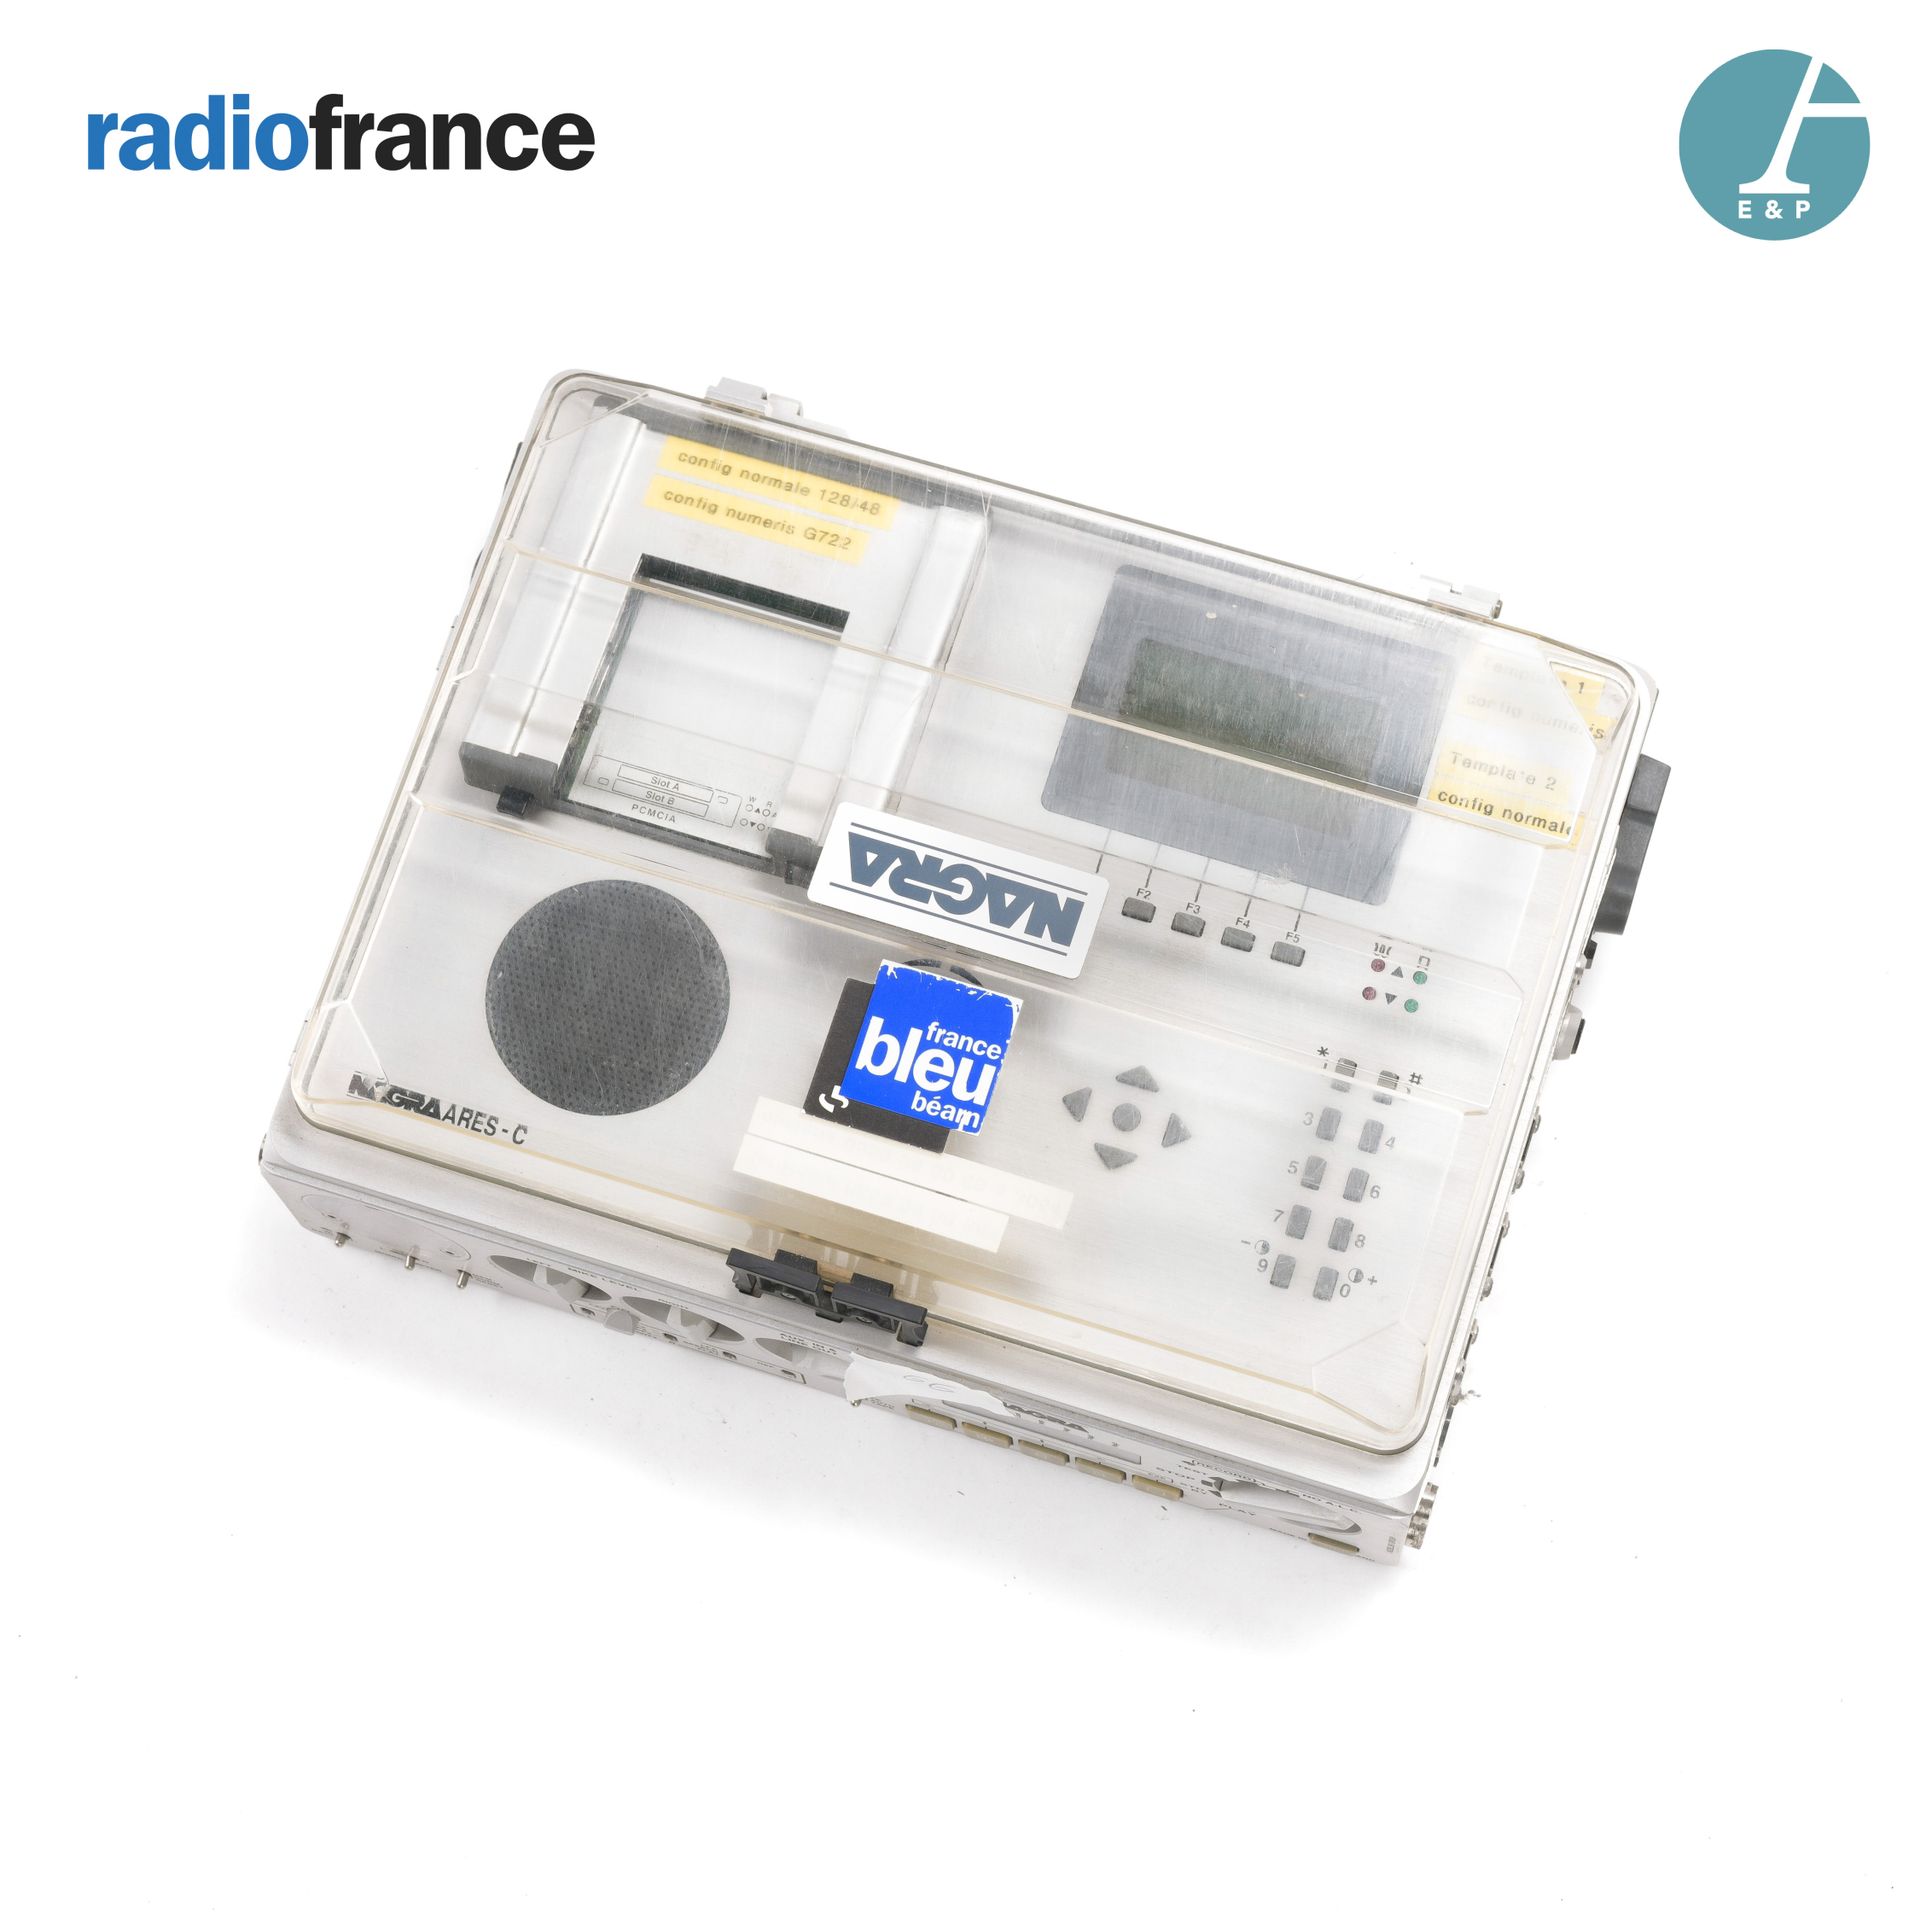 Null NAGRA recorder, Ares-C

H: 9,5cm - W: 29cm - D: 22cm

Sticker France Bleu B&hellip;